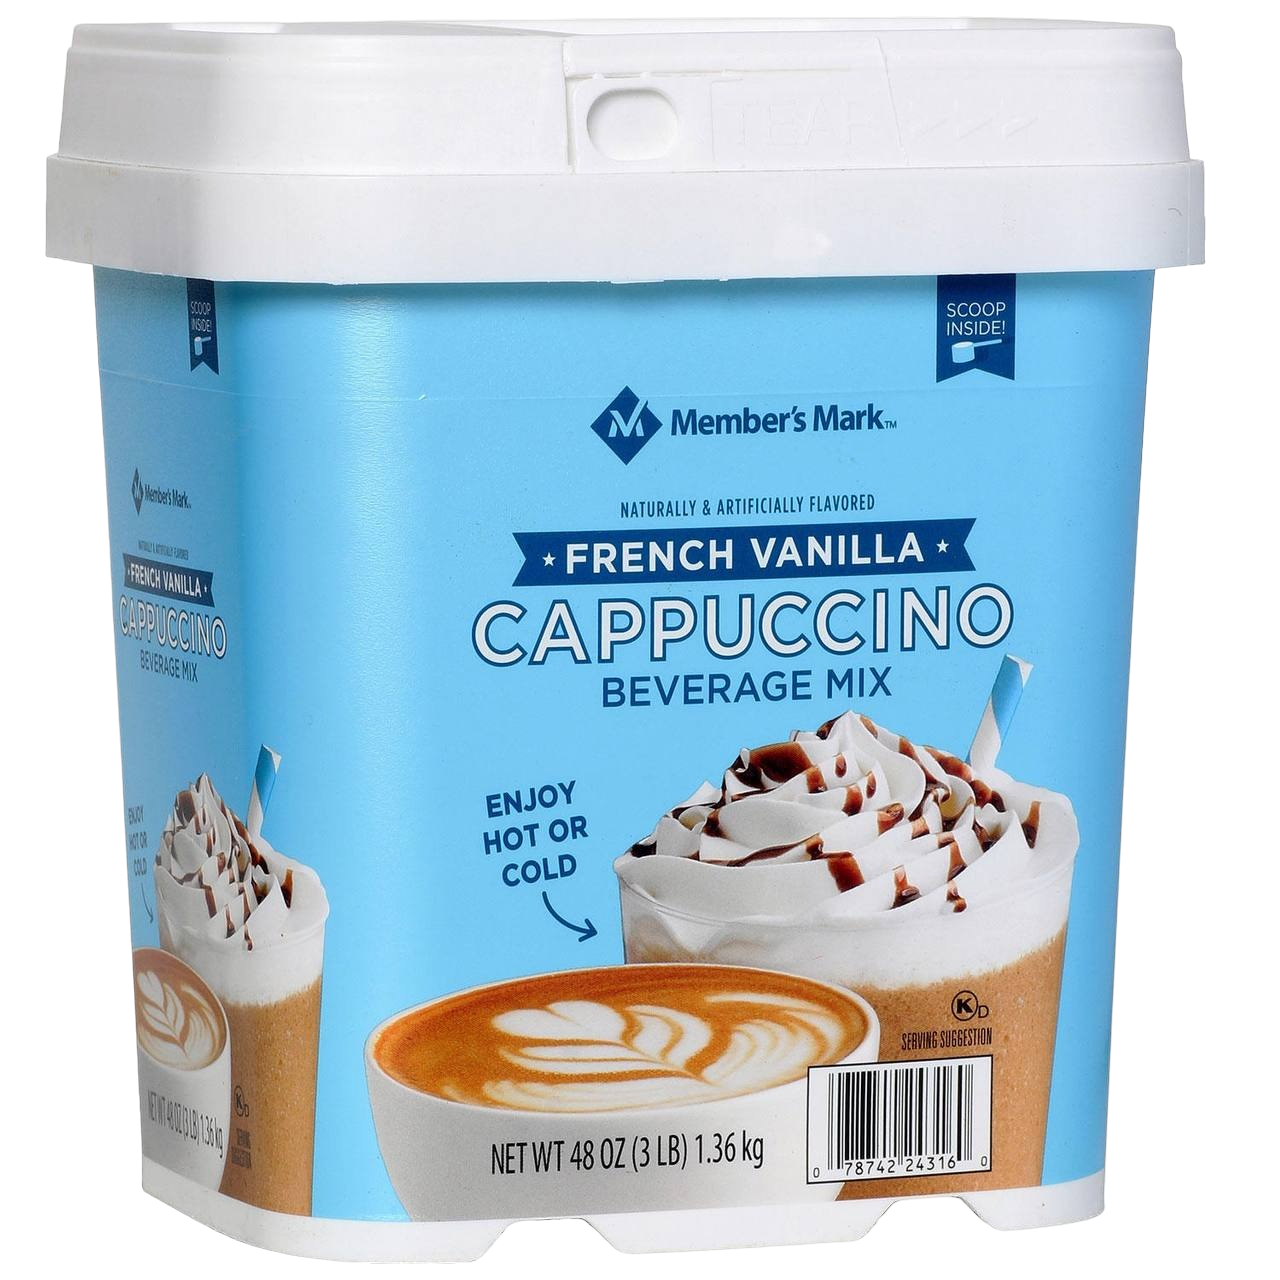 Member's Mark French Vanilla Cappuccino Beverage Mix, 1.36Kg.